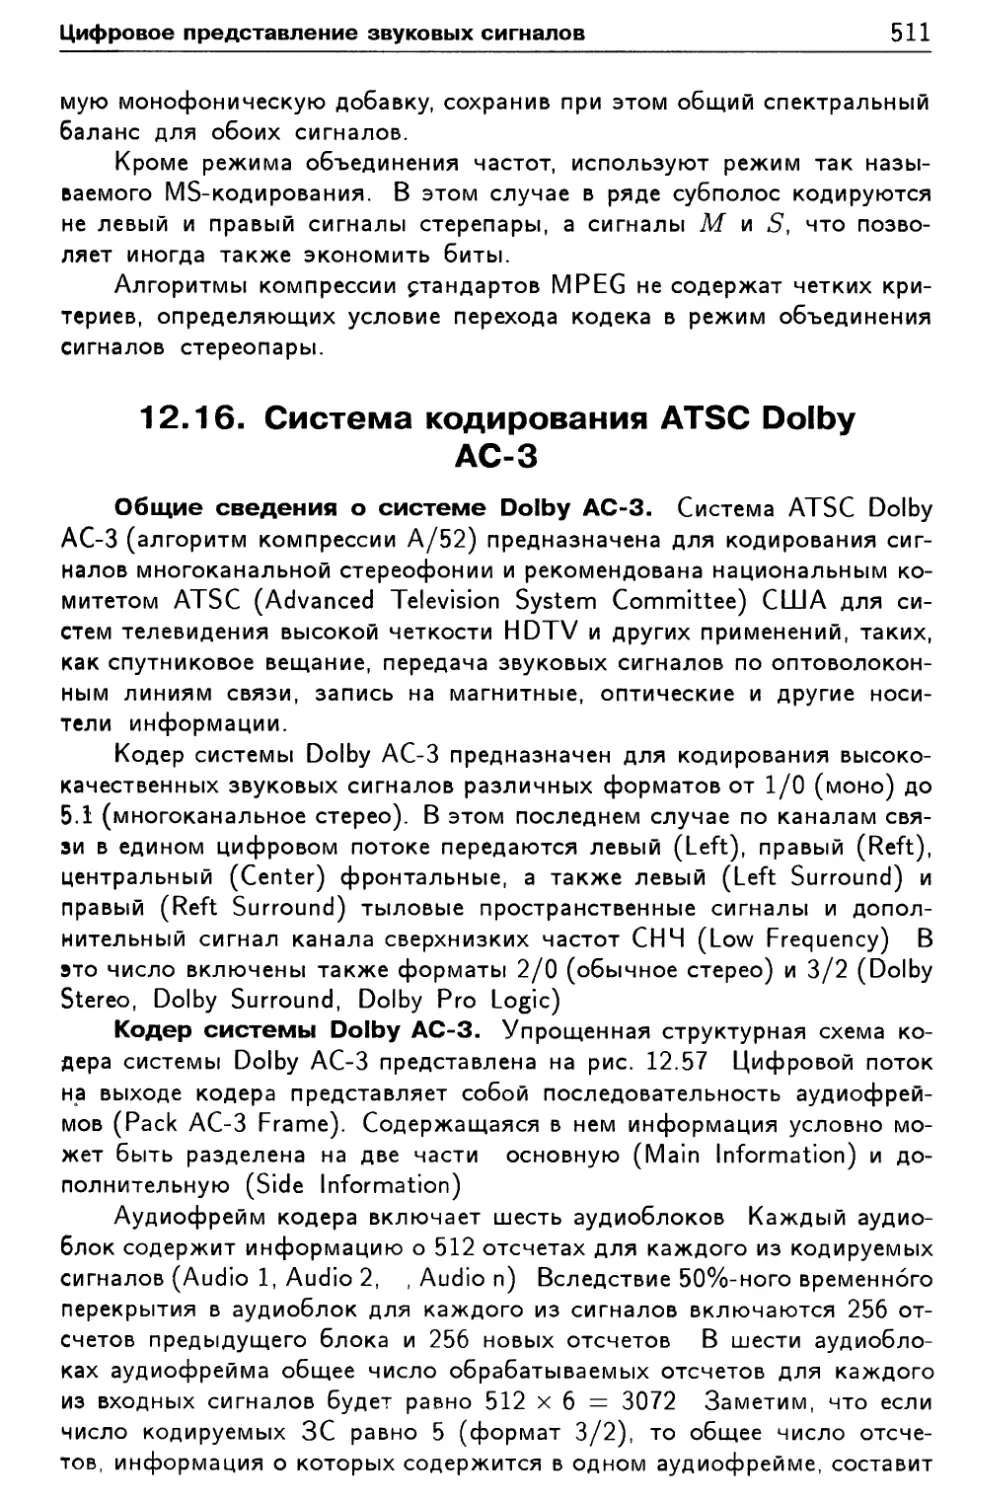 12.16 Система кодирования ATSC Dolby АС-3